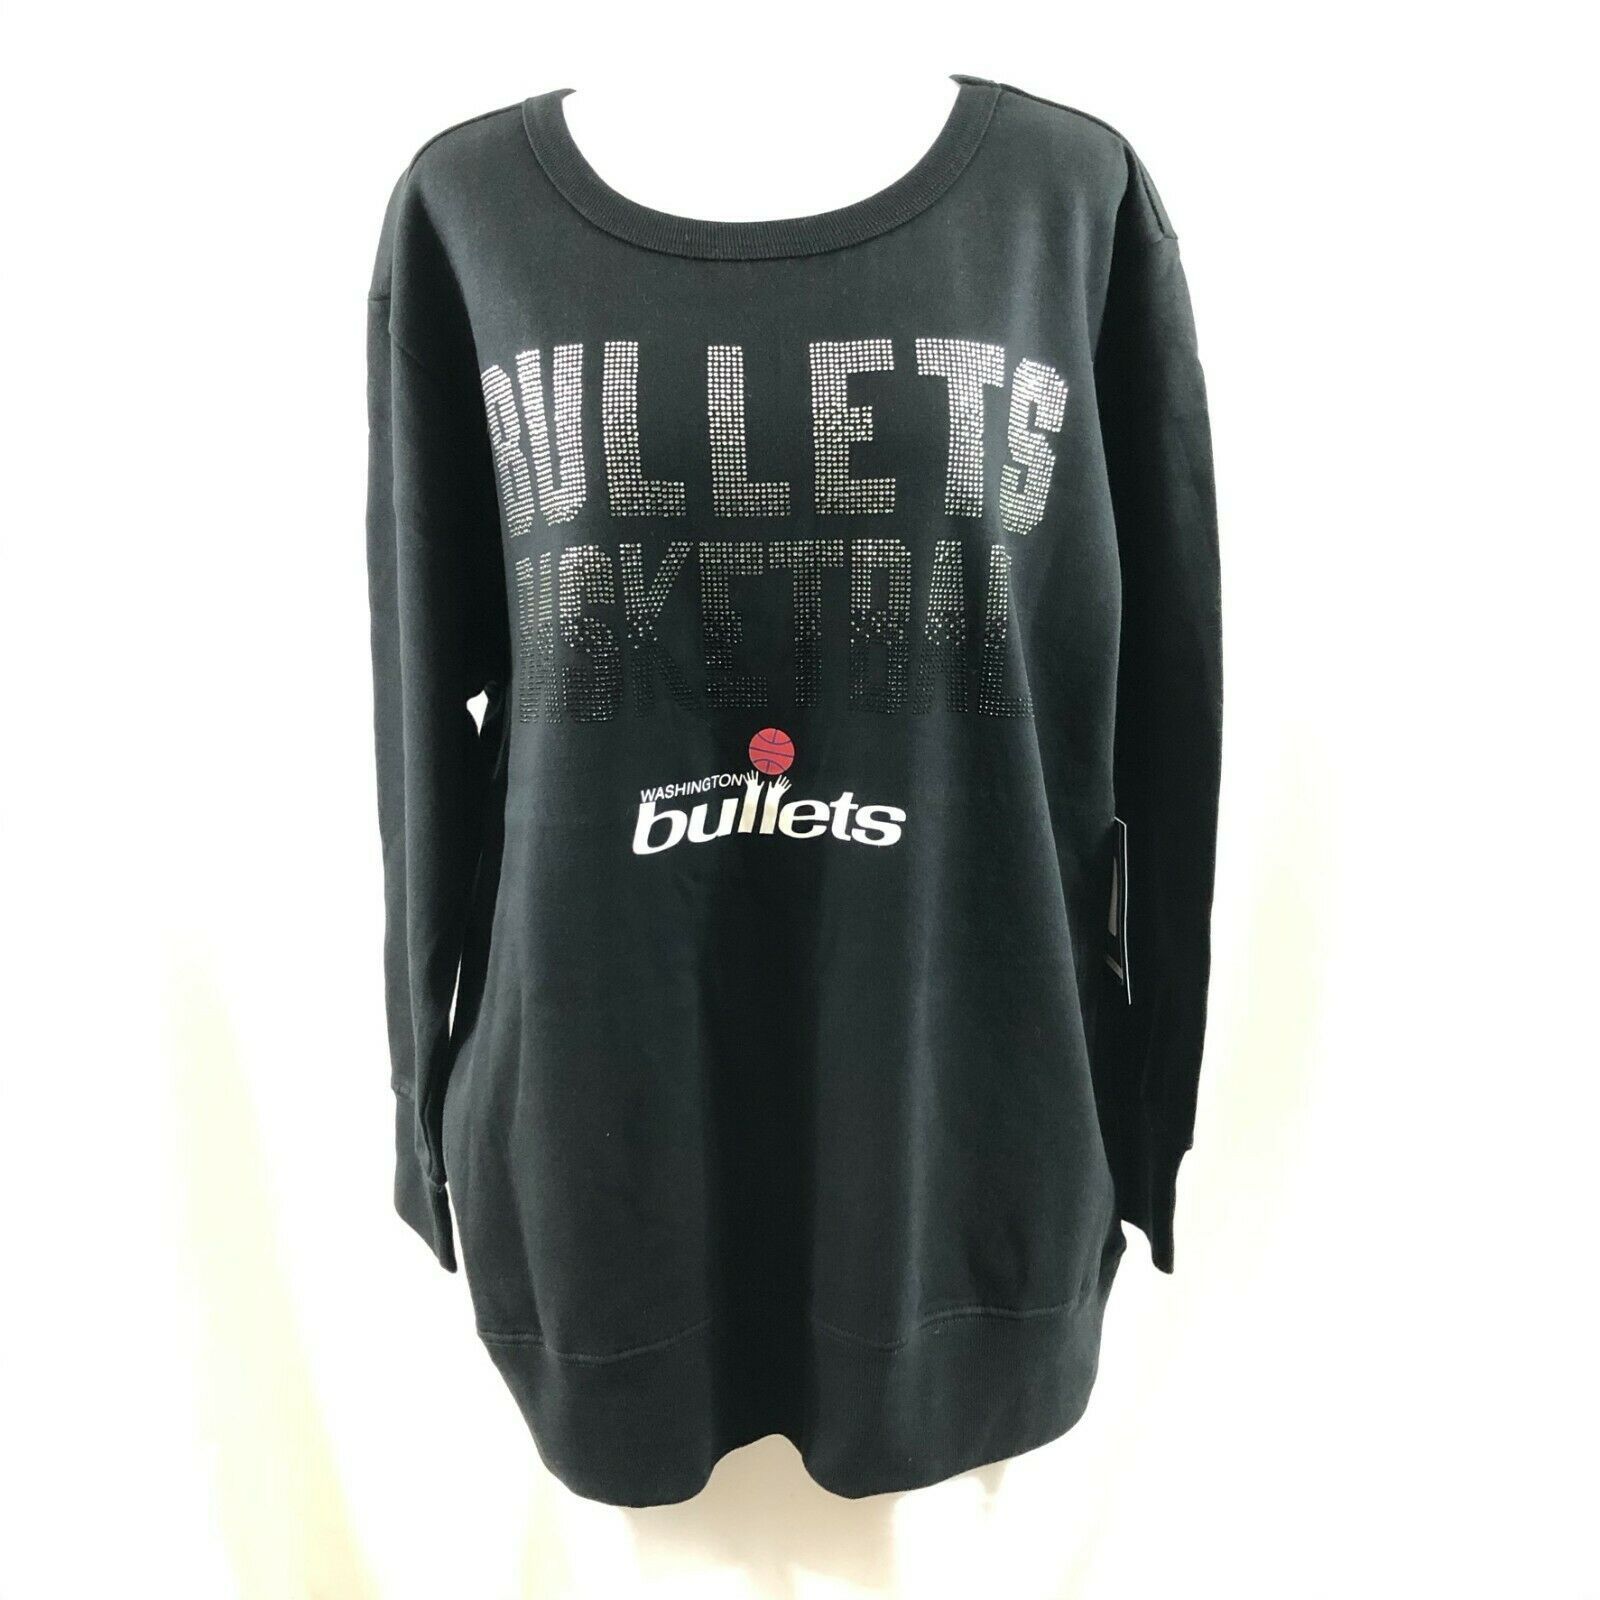 NBA Washington Bullets Womens Sweatshirt Rhinestones Black Size L - $12.59